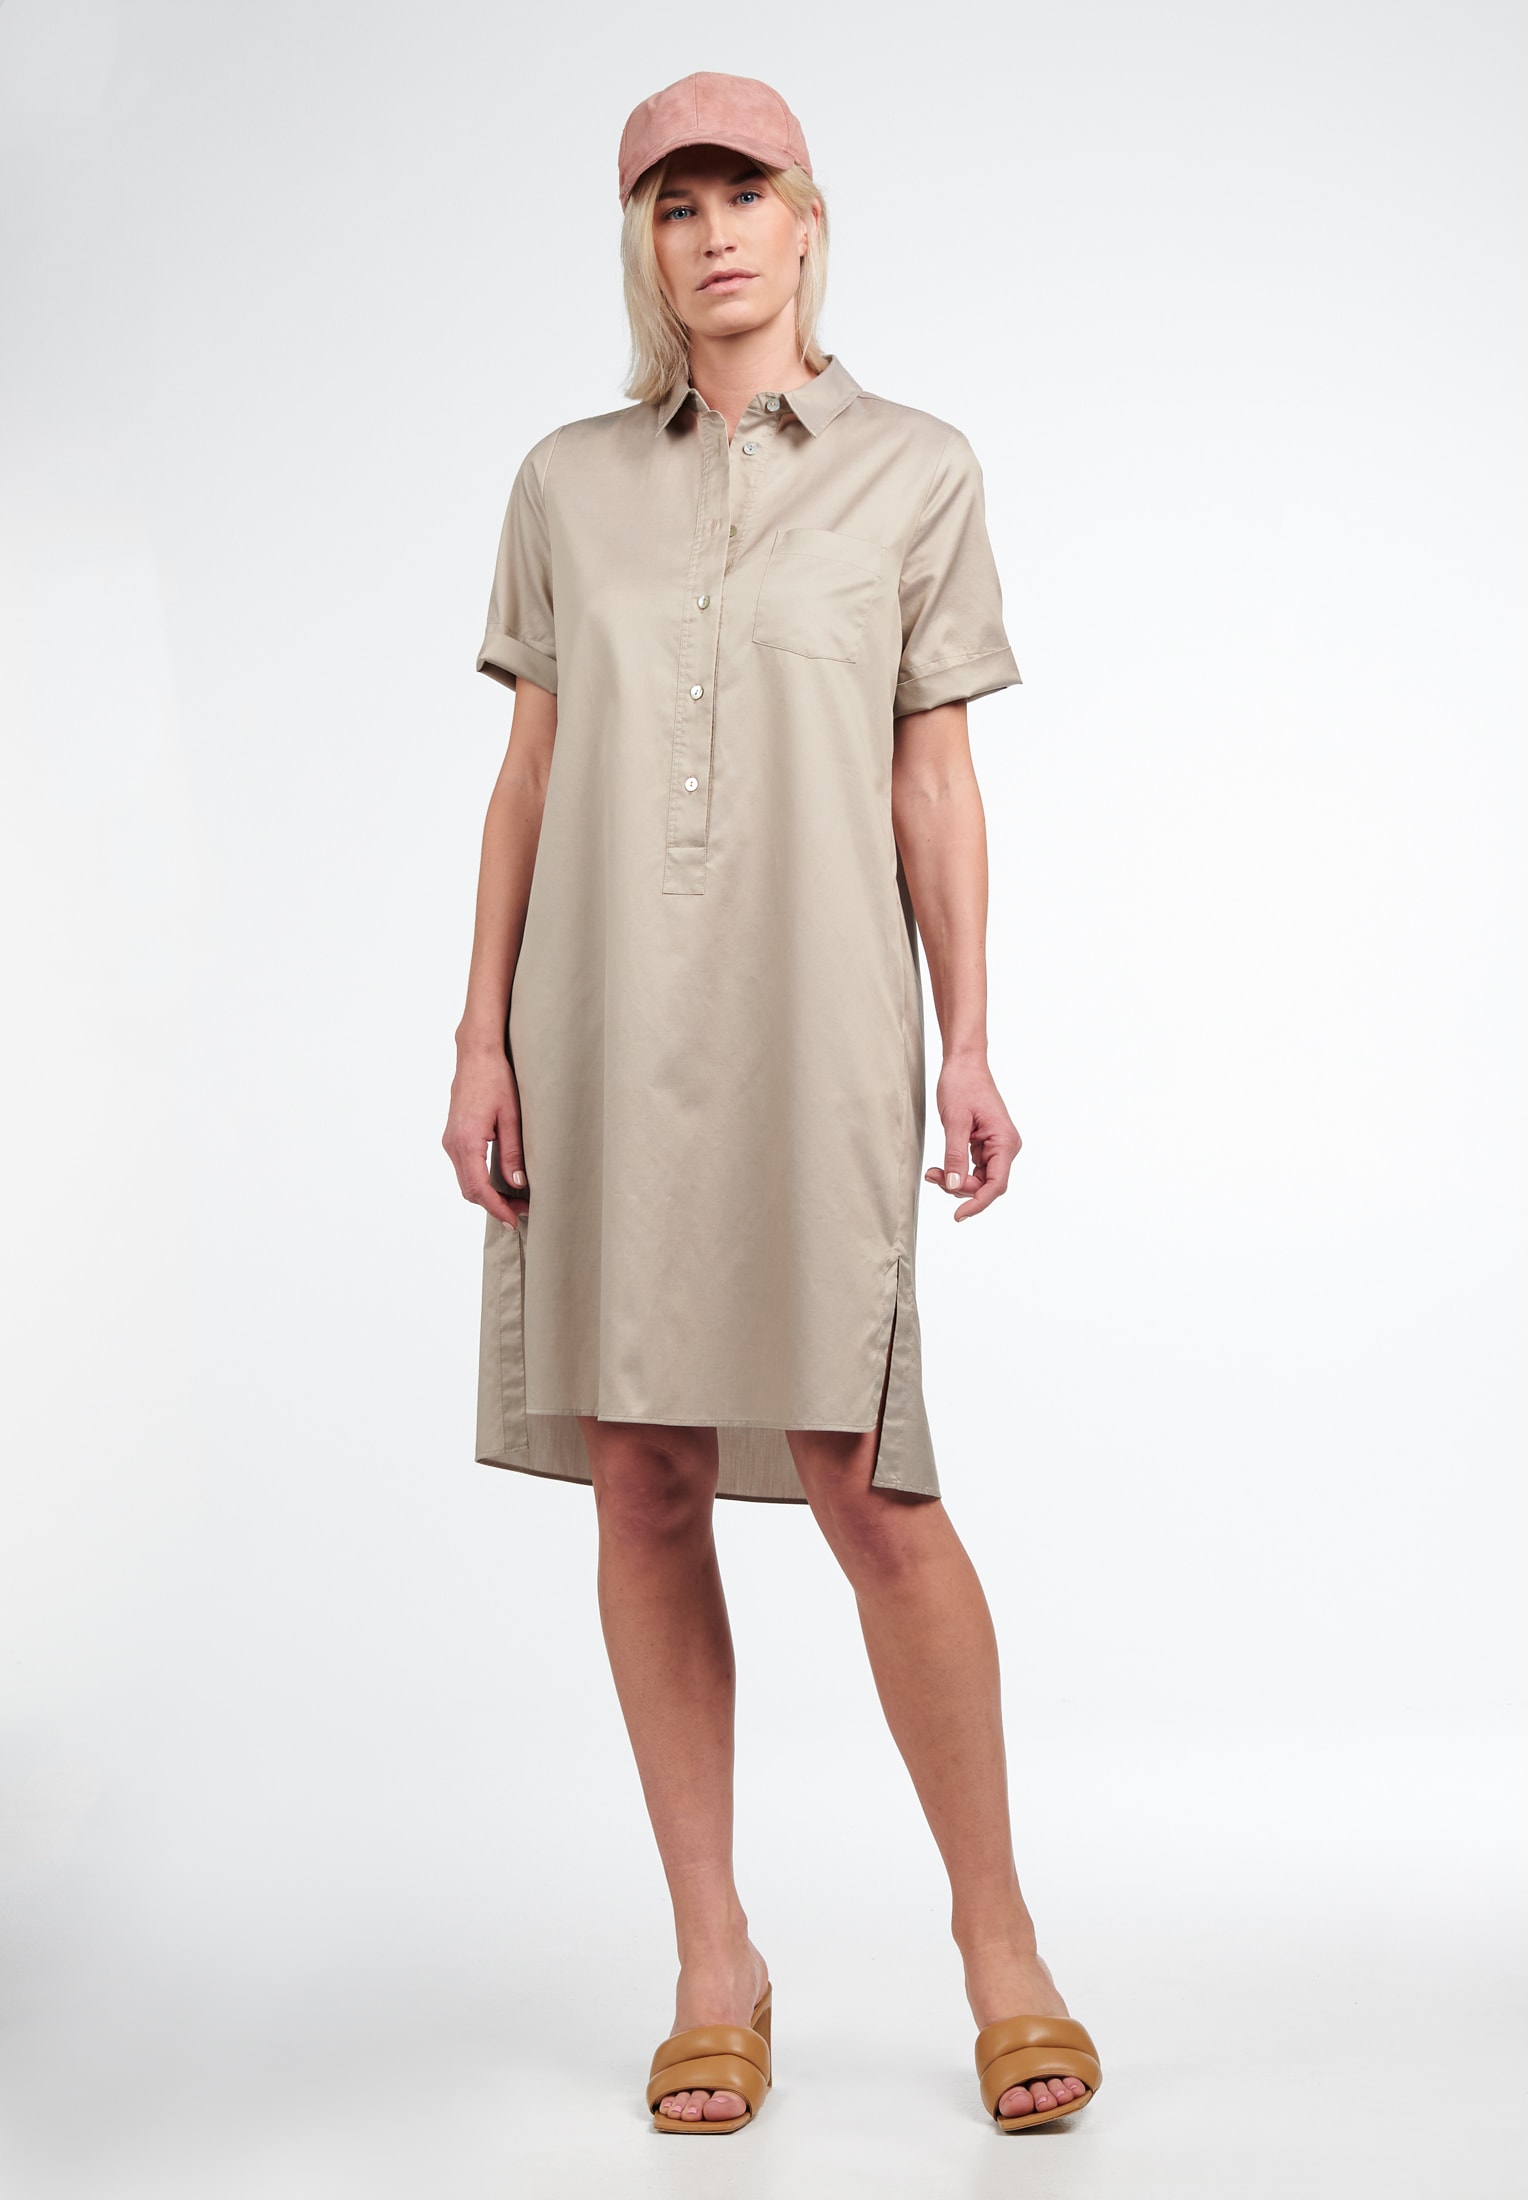 Soft Luxury Shirt unifarben Bluse grün 42 Kurzarm | in | | grün 2DR00234-04-01-42-1/2 